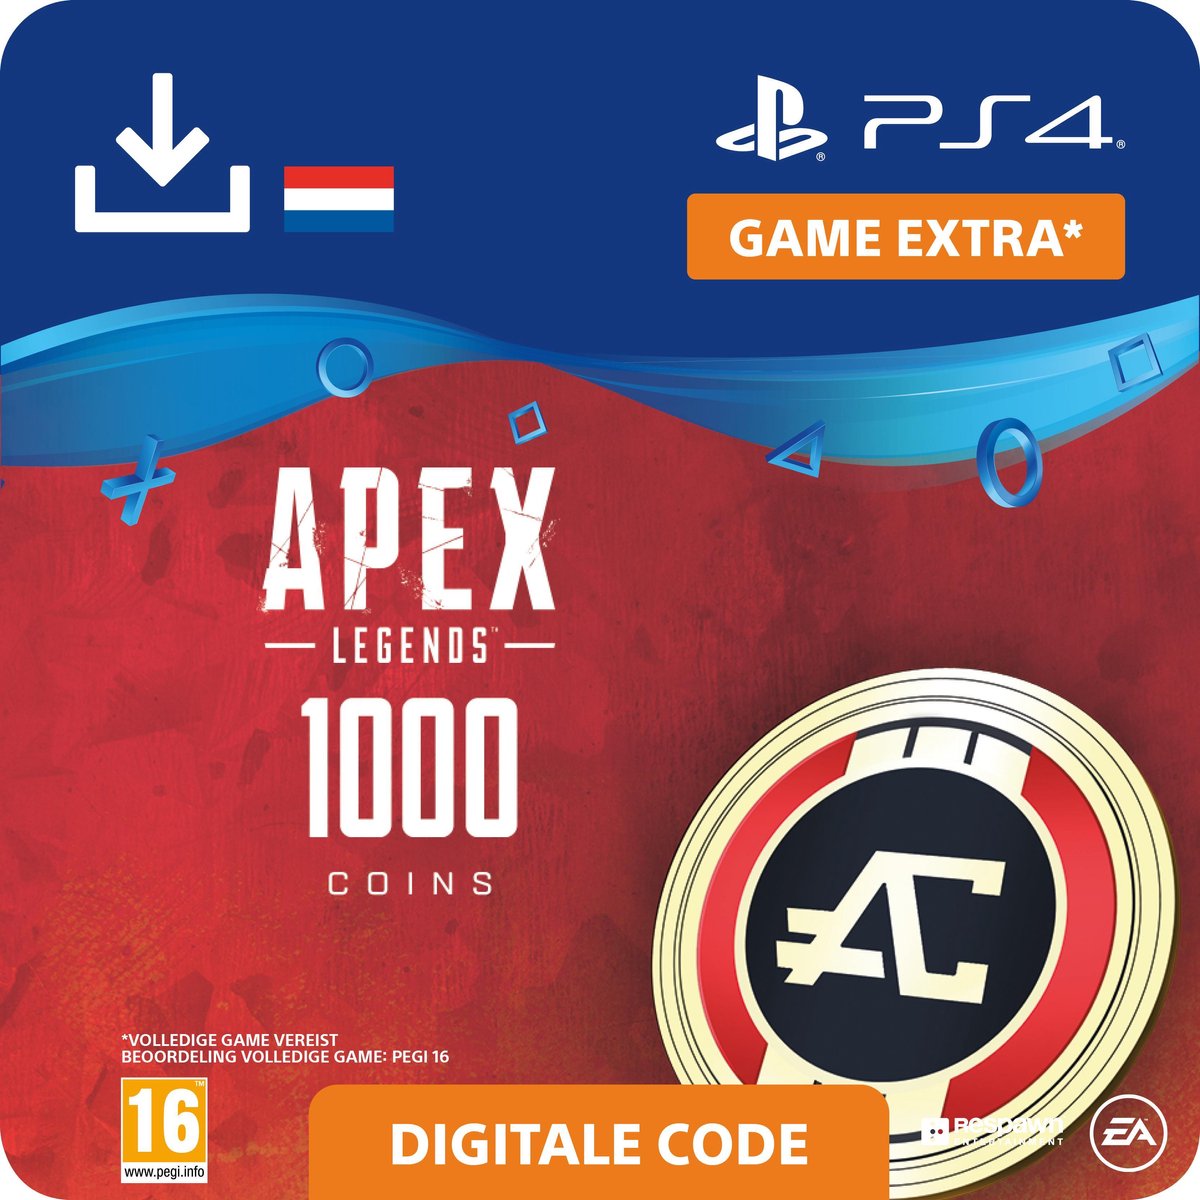 Apex Legends - digitale valuta - 1.000 Apex Coins - NL - PS4 download - Sony digitaal